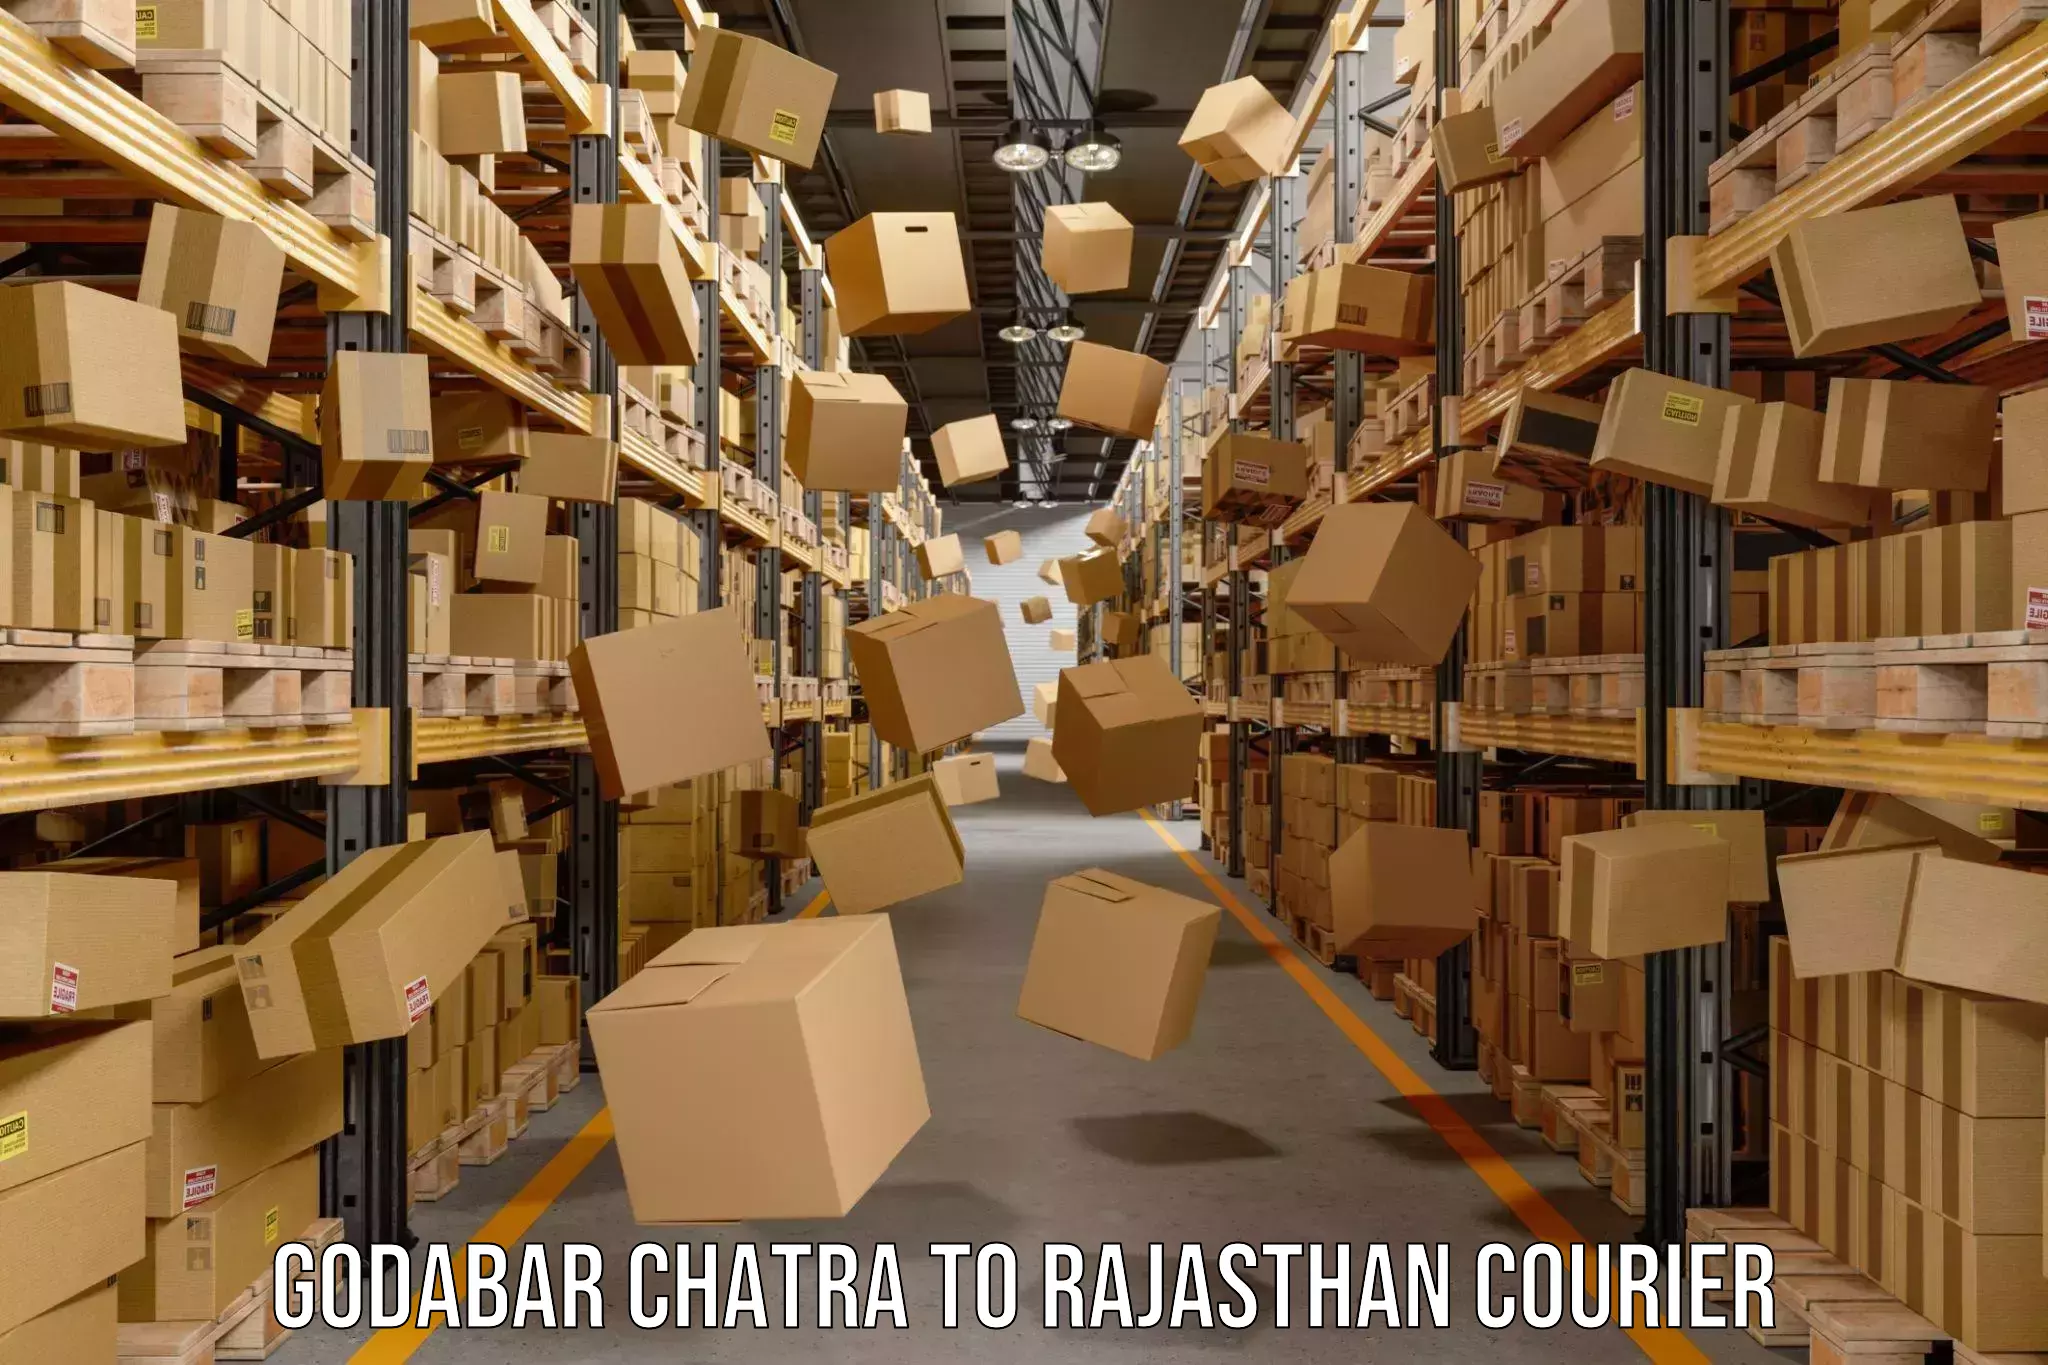 Courier service comparison Godabar Chatra to Kherli